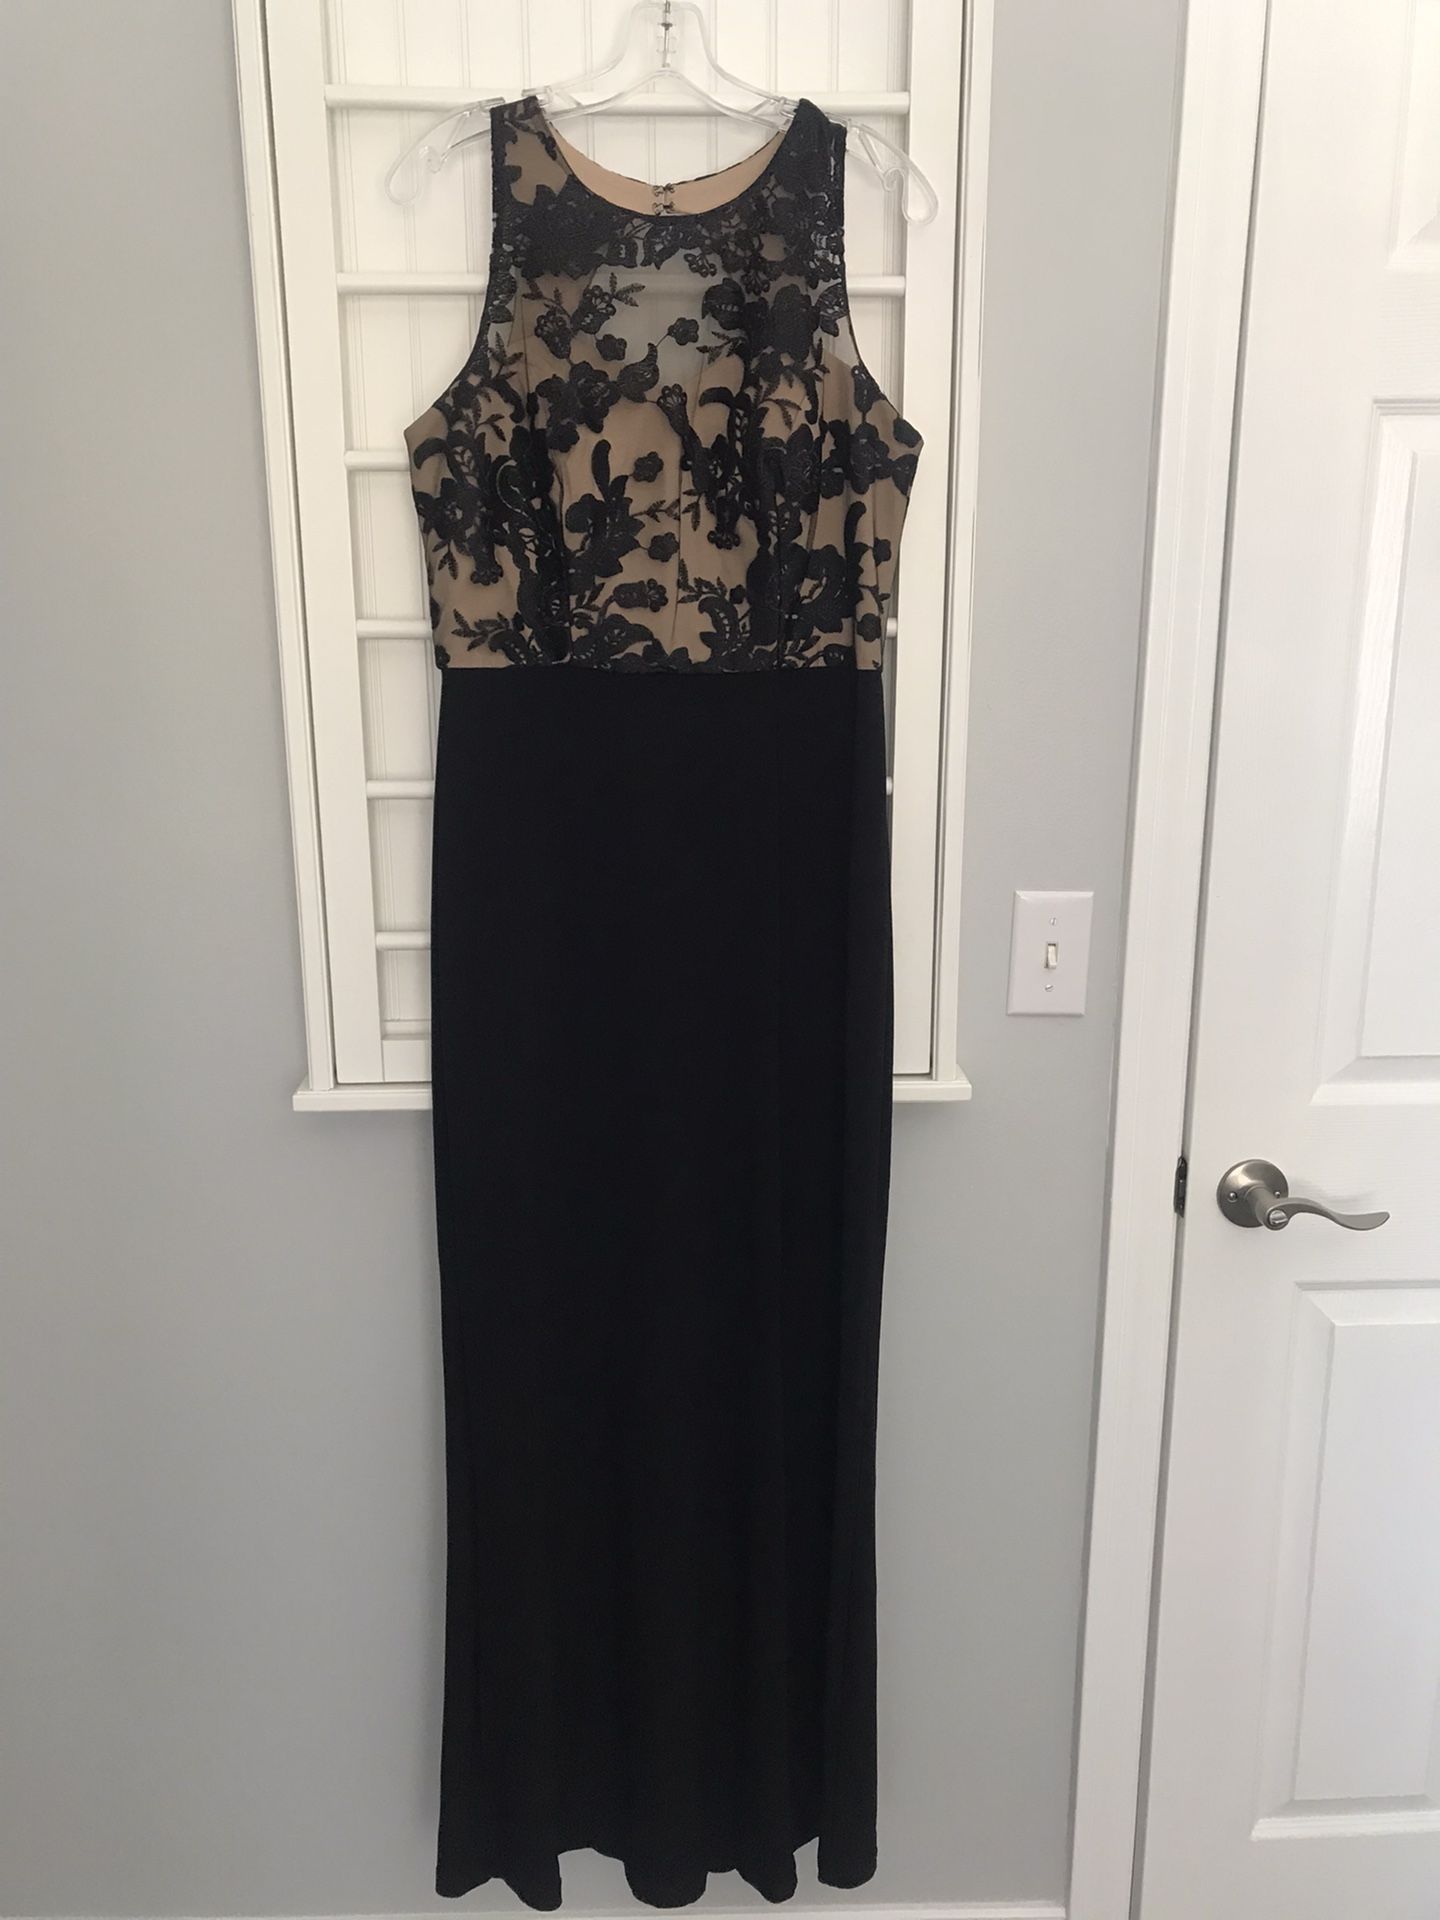 Elegant Long Black Gown 